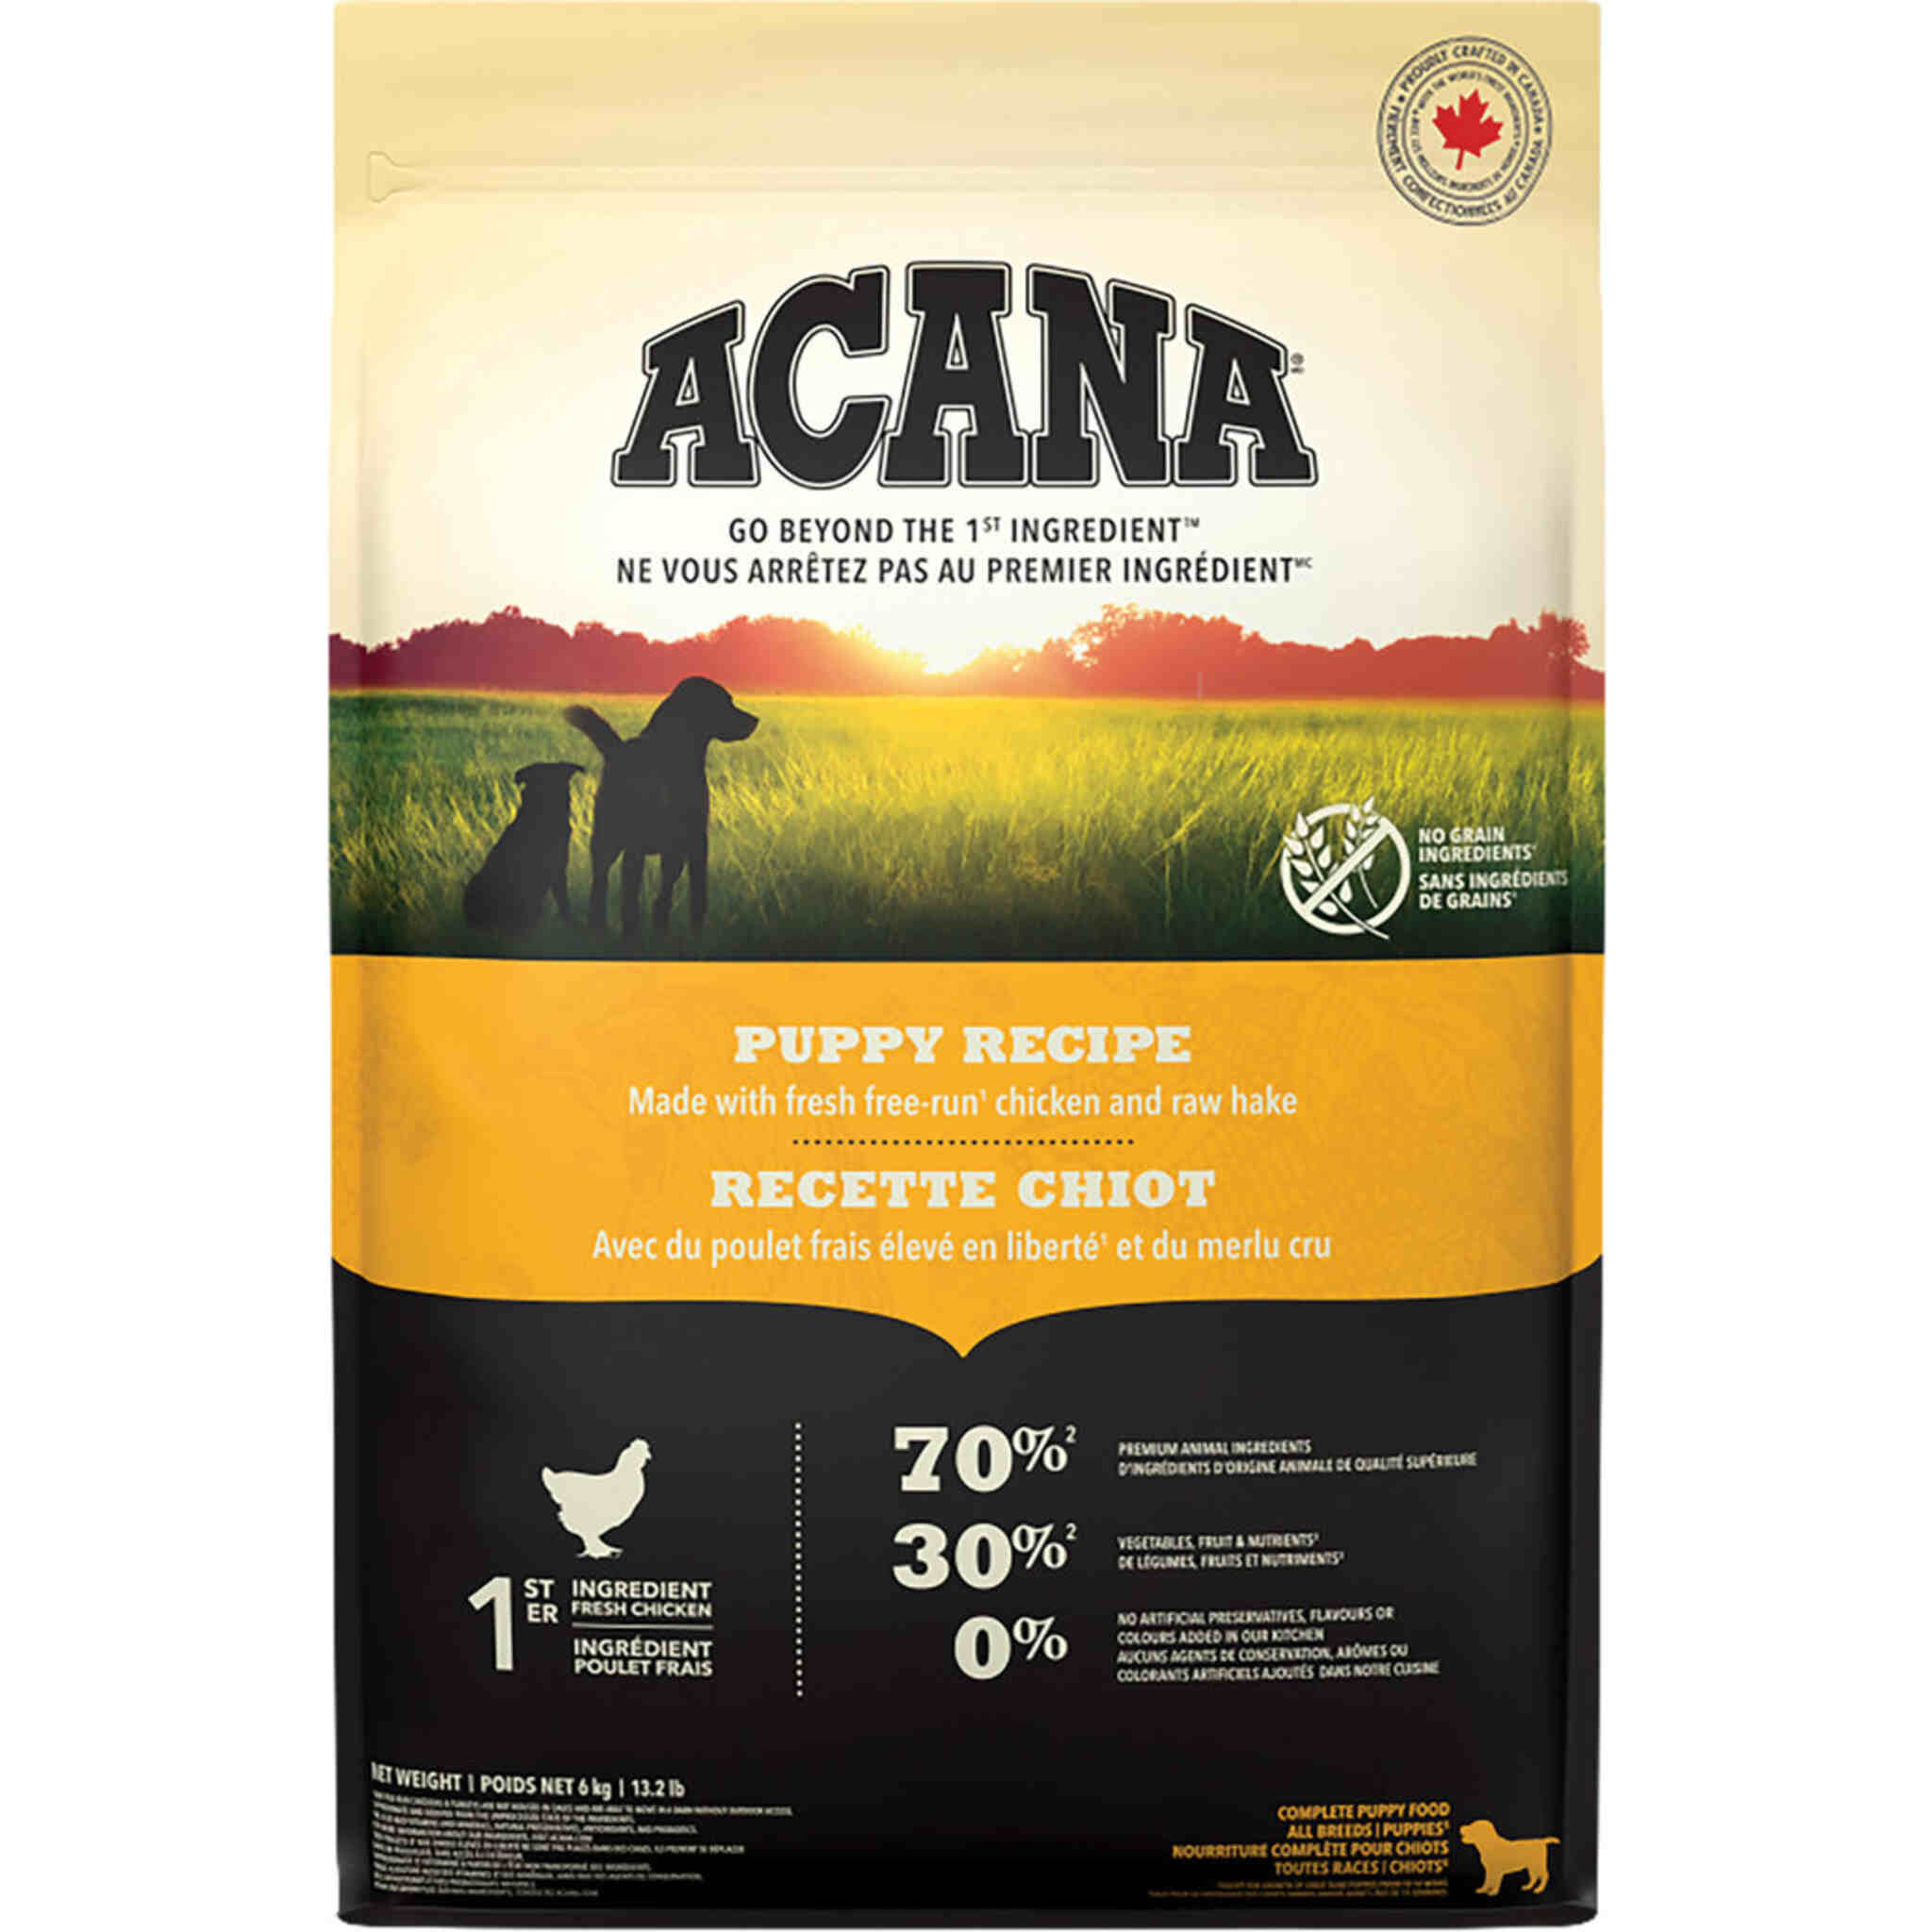 A bag of Acana Puppy food, chicken recipe, 25 lb.